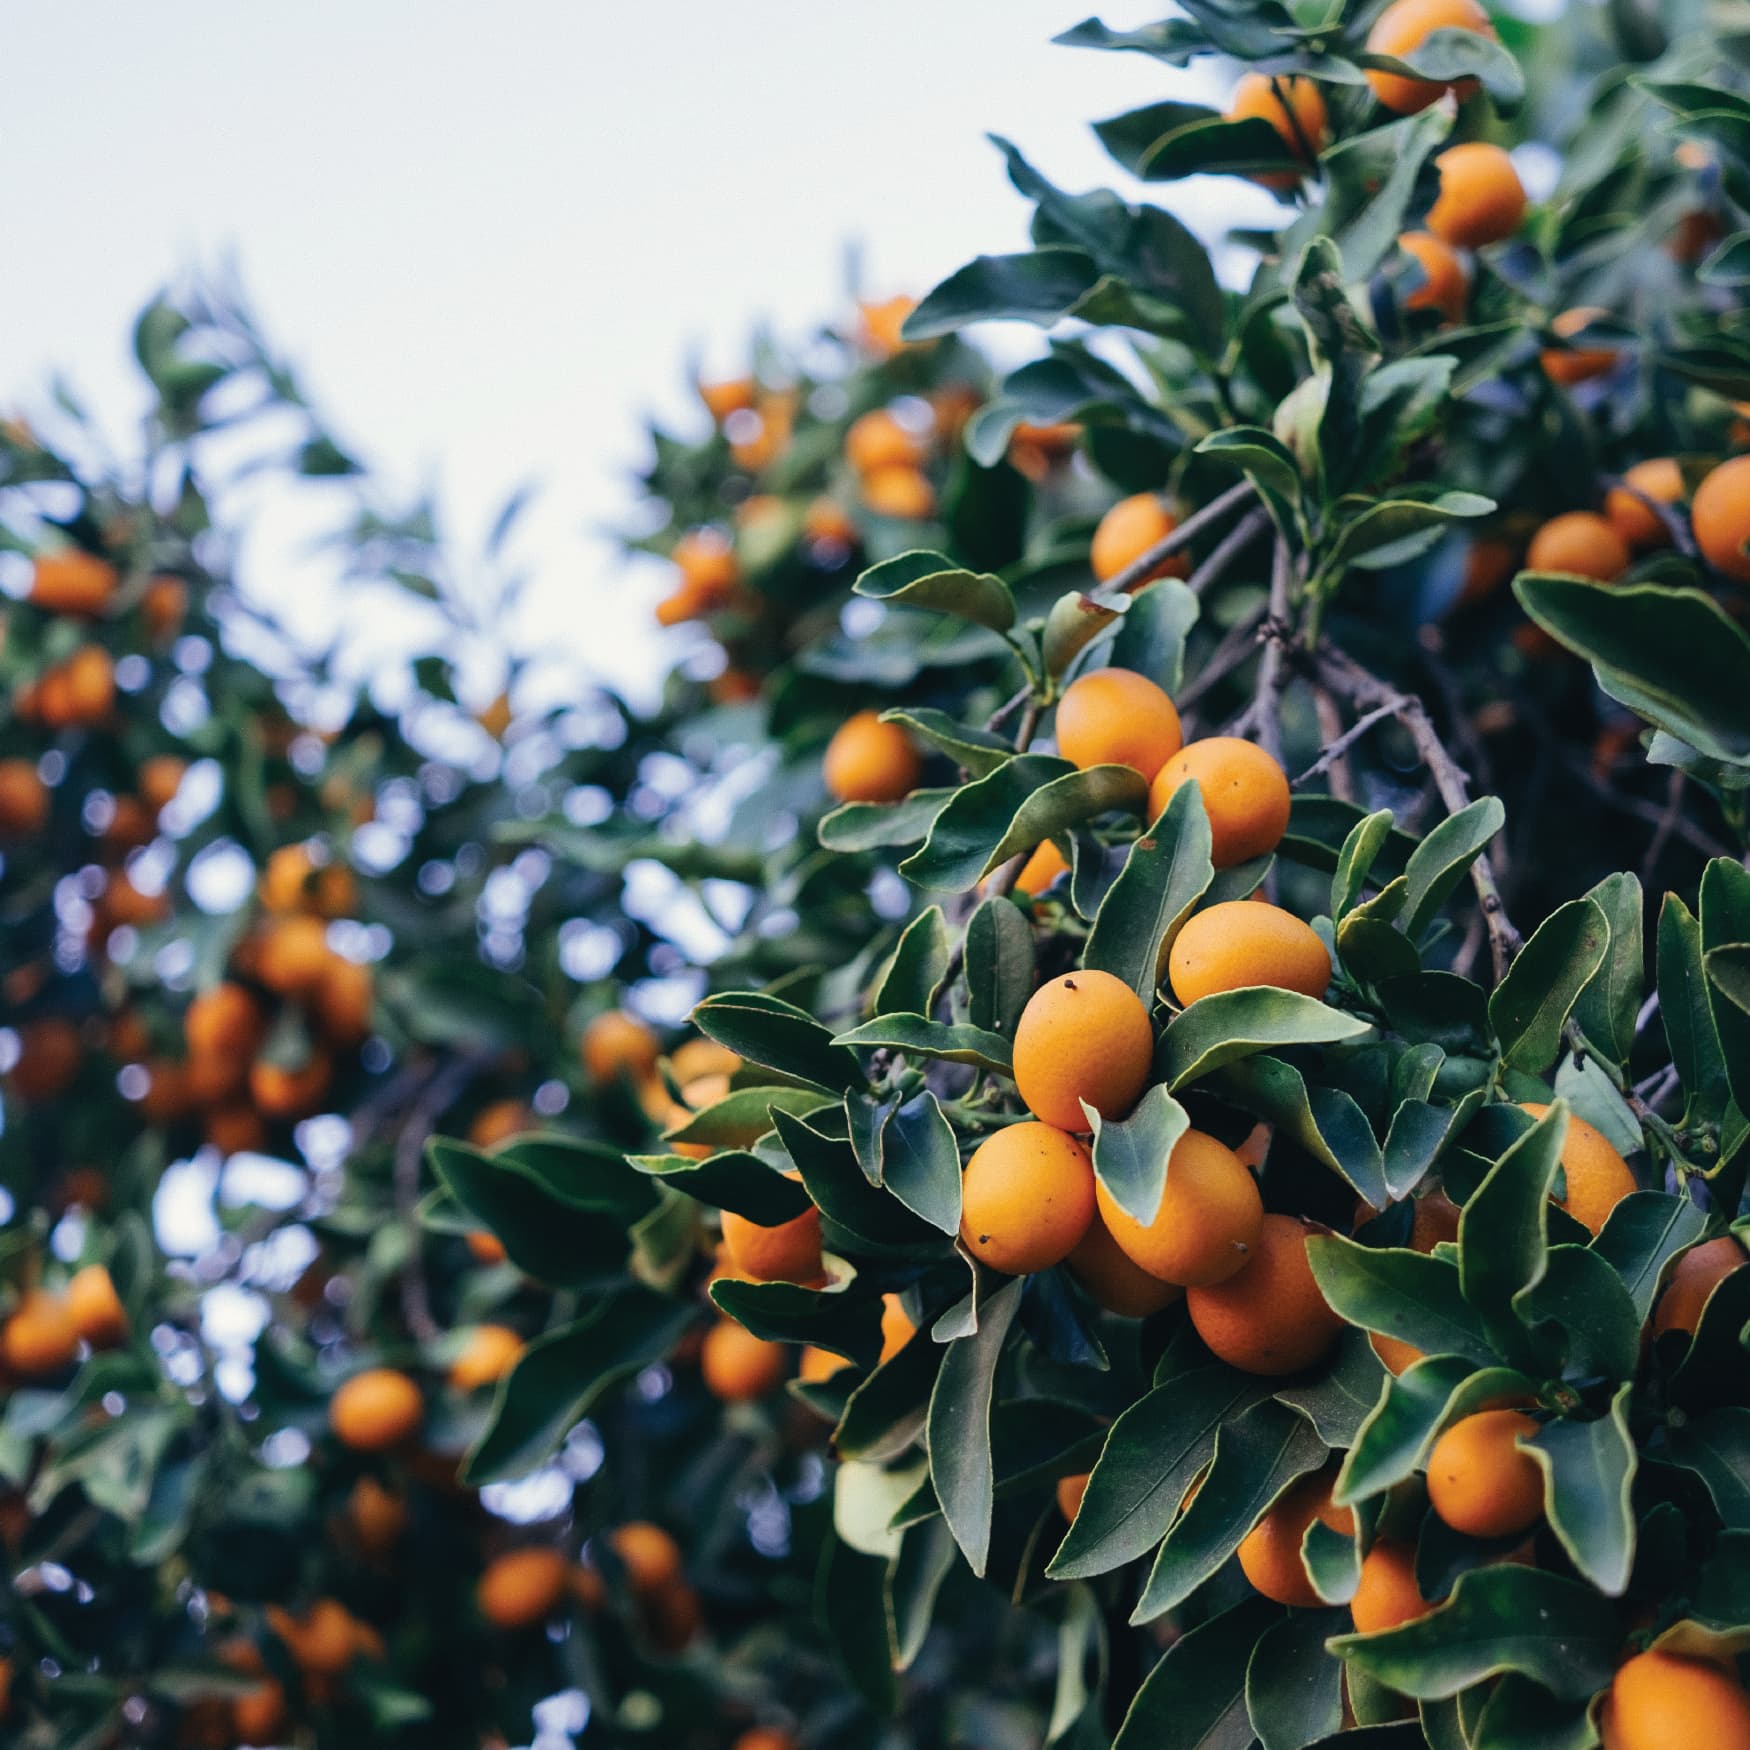 Image of oranges on an orange tree